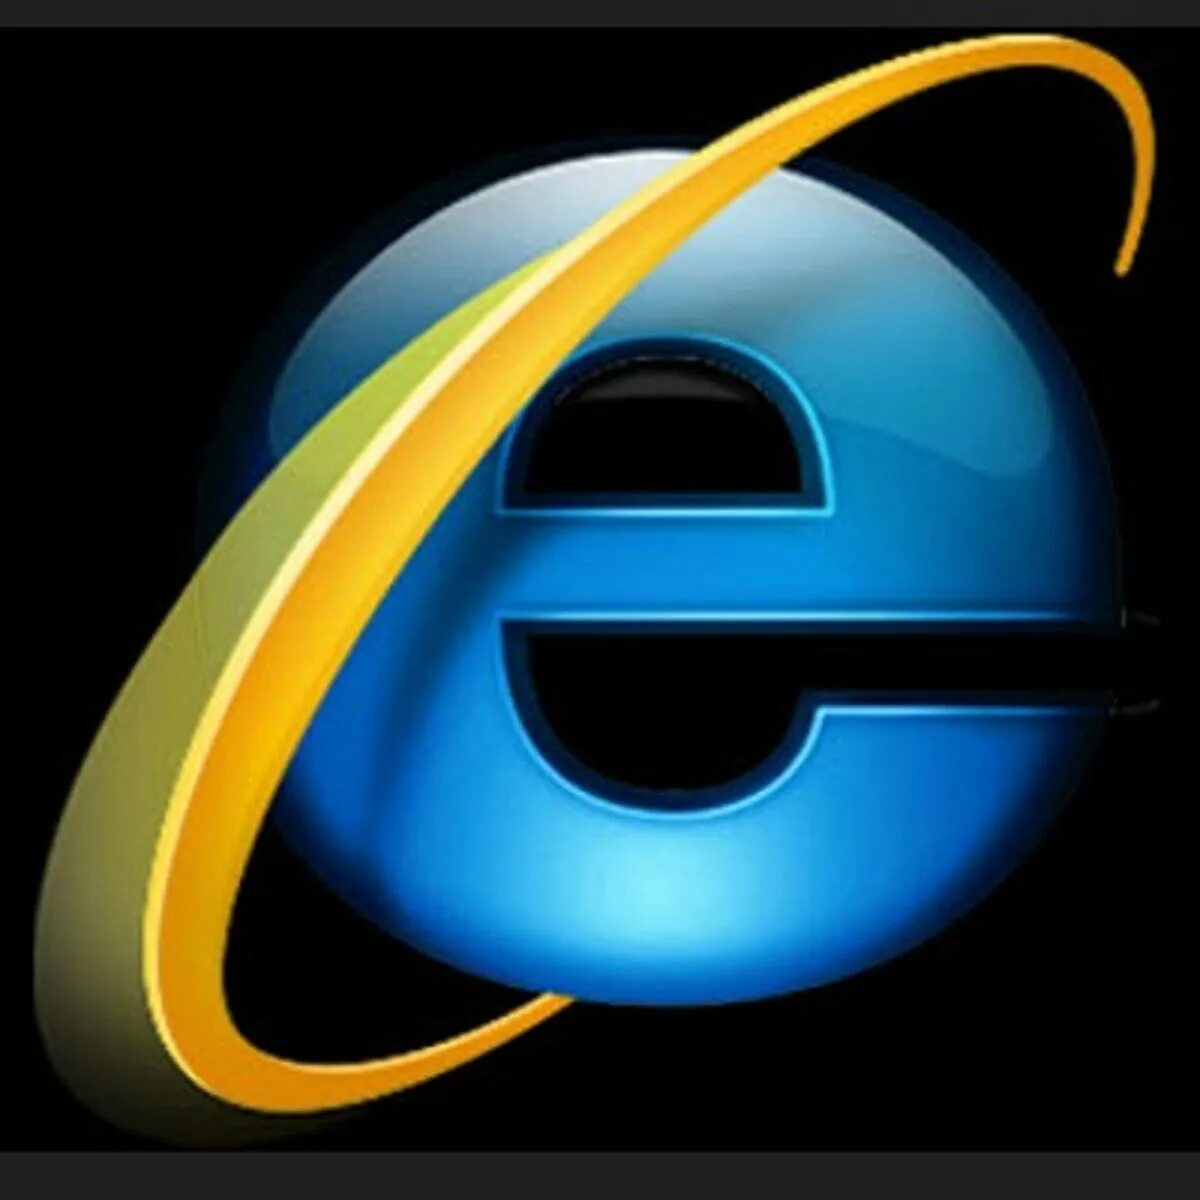 Internet Explorer. Интернет Explorer. Логотип интернет эксплорер. Ярлык интернет эксплорер. Браузера microsoft internet explorer